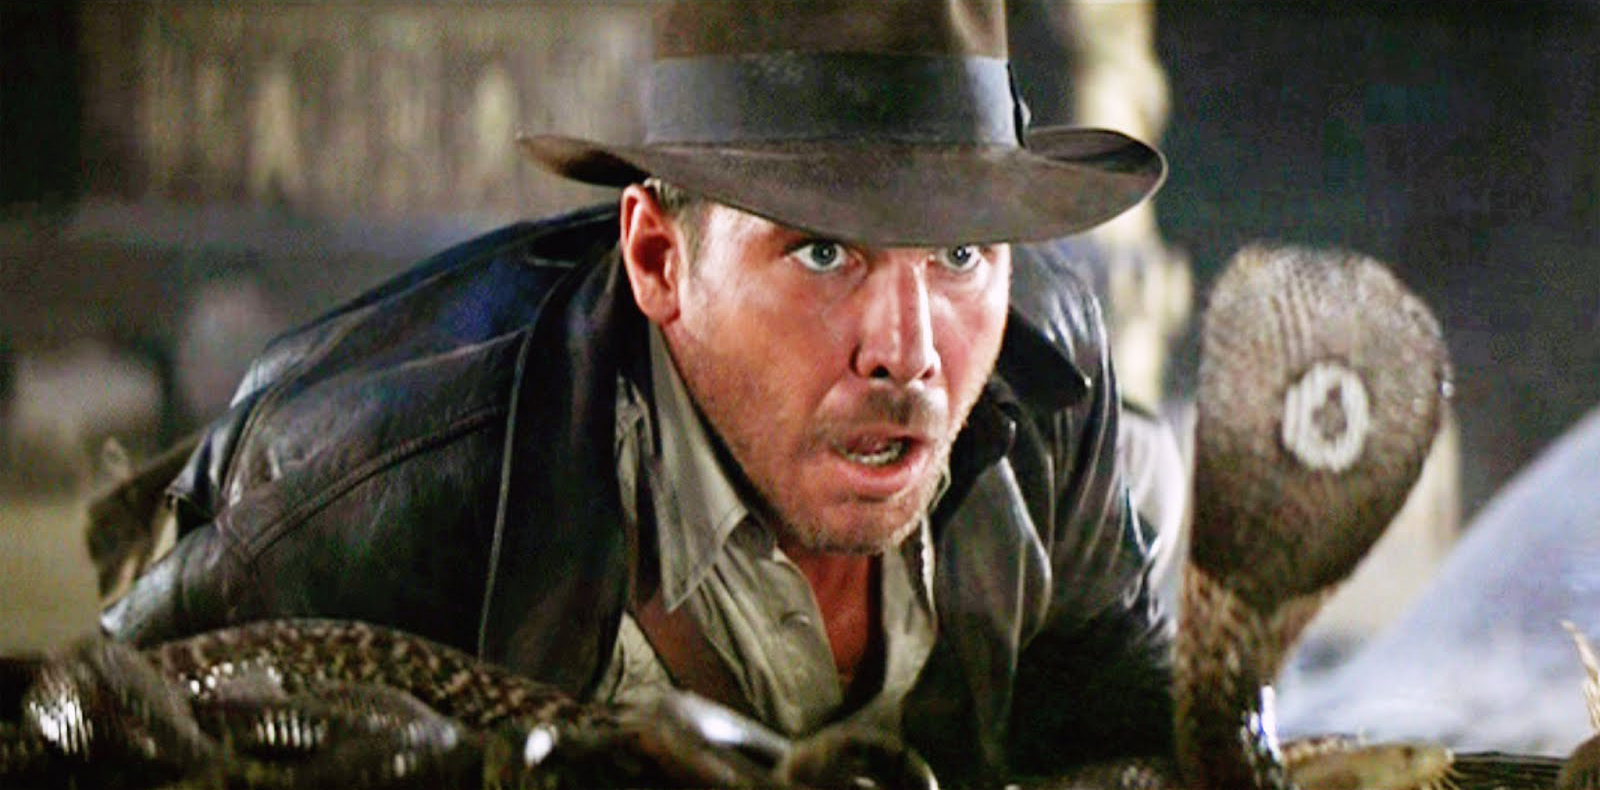 Indiana Jones 5 is Definitely Going to Happen at Disney